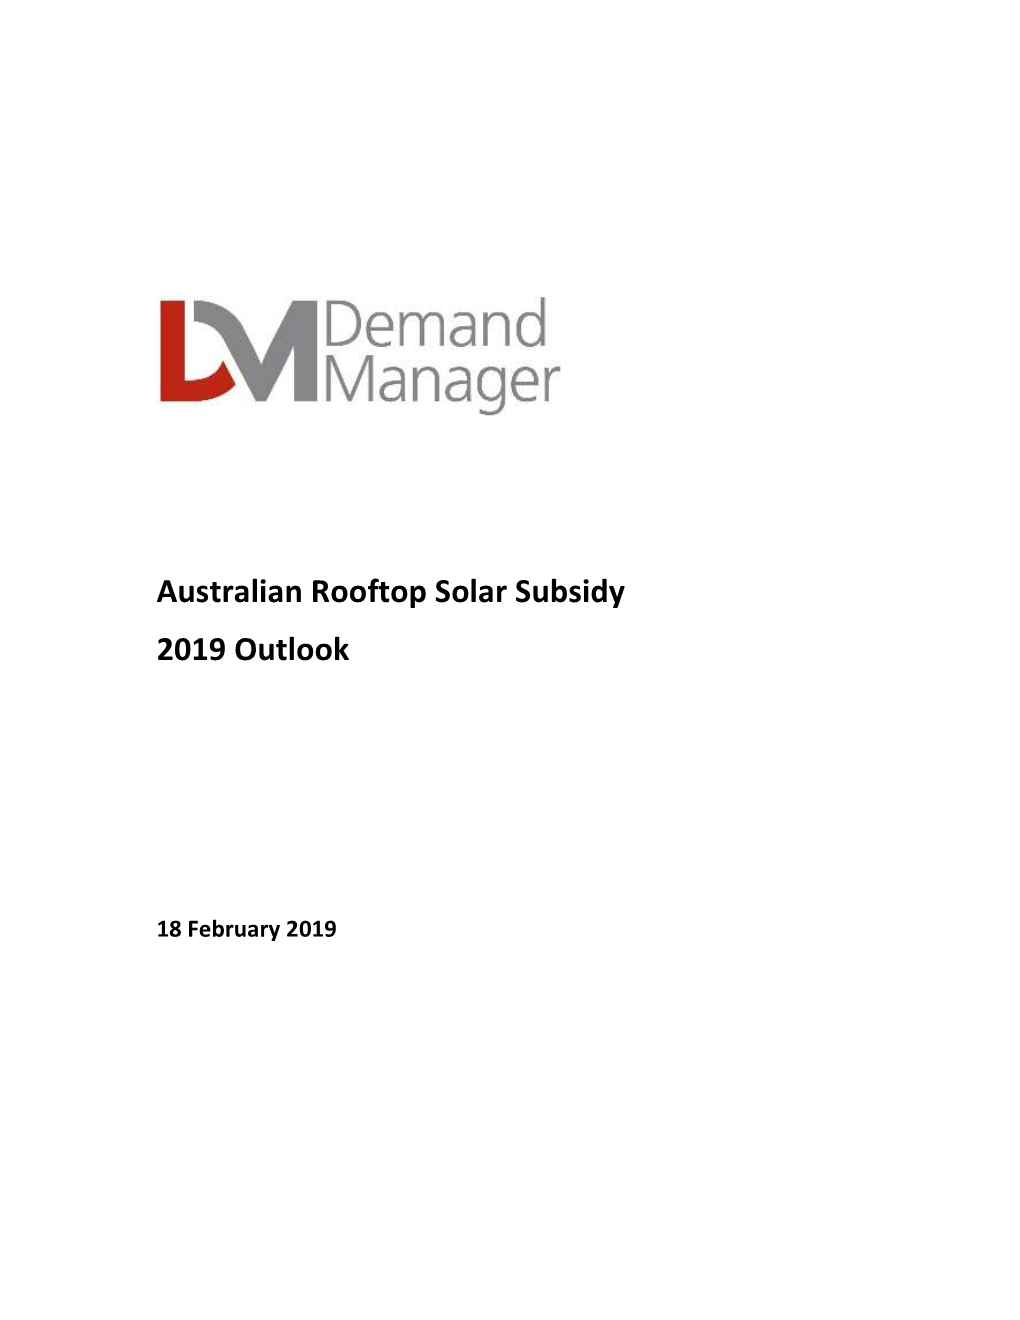 Australian Rooftop Solar Subsidy 2019 Outlook